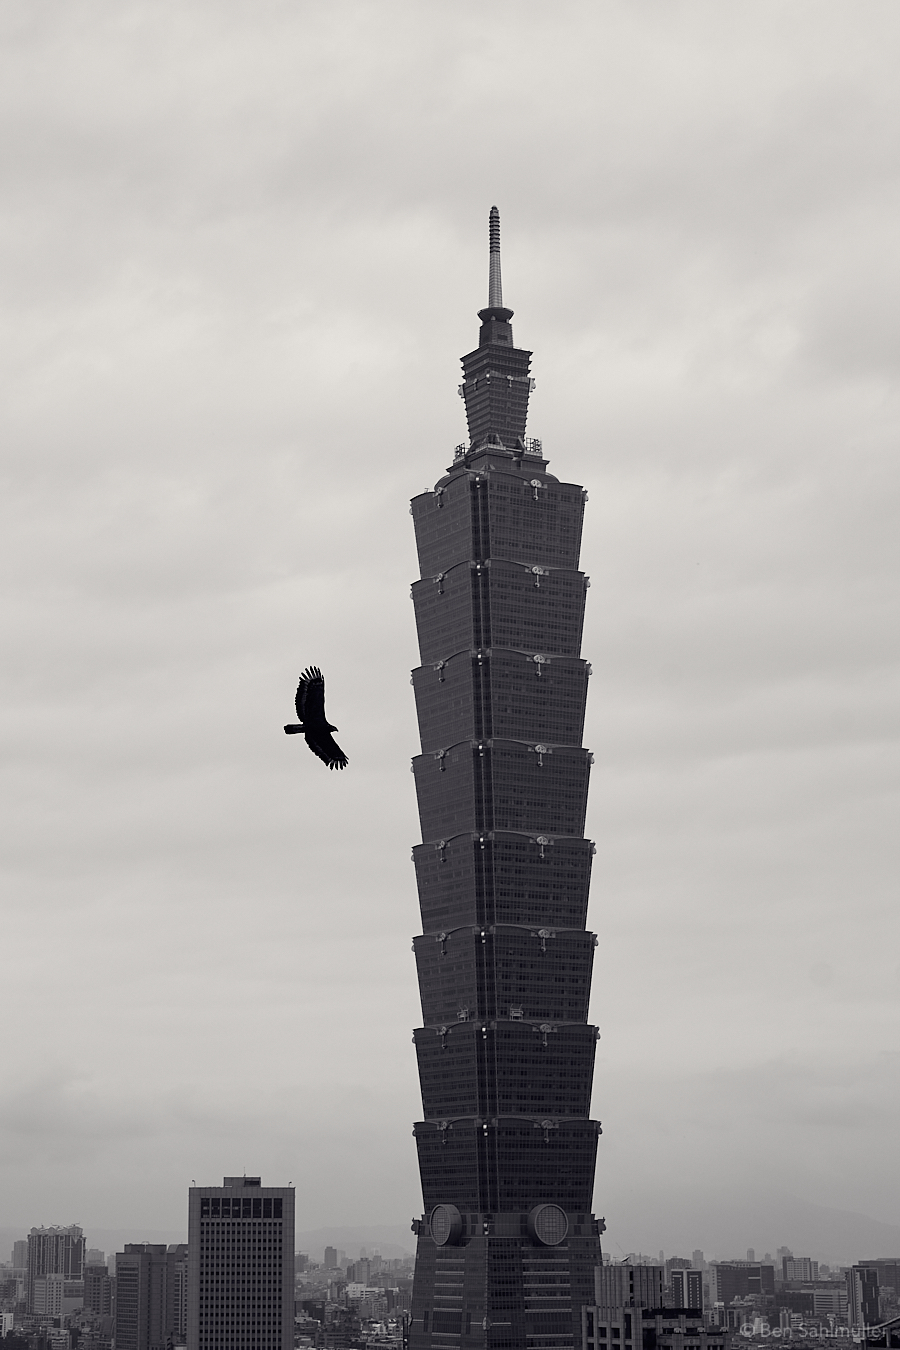 An eagle circling the skies around Taipei 101